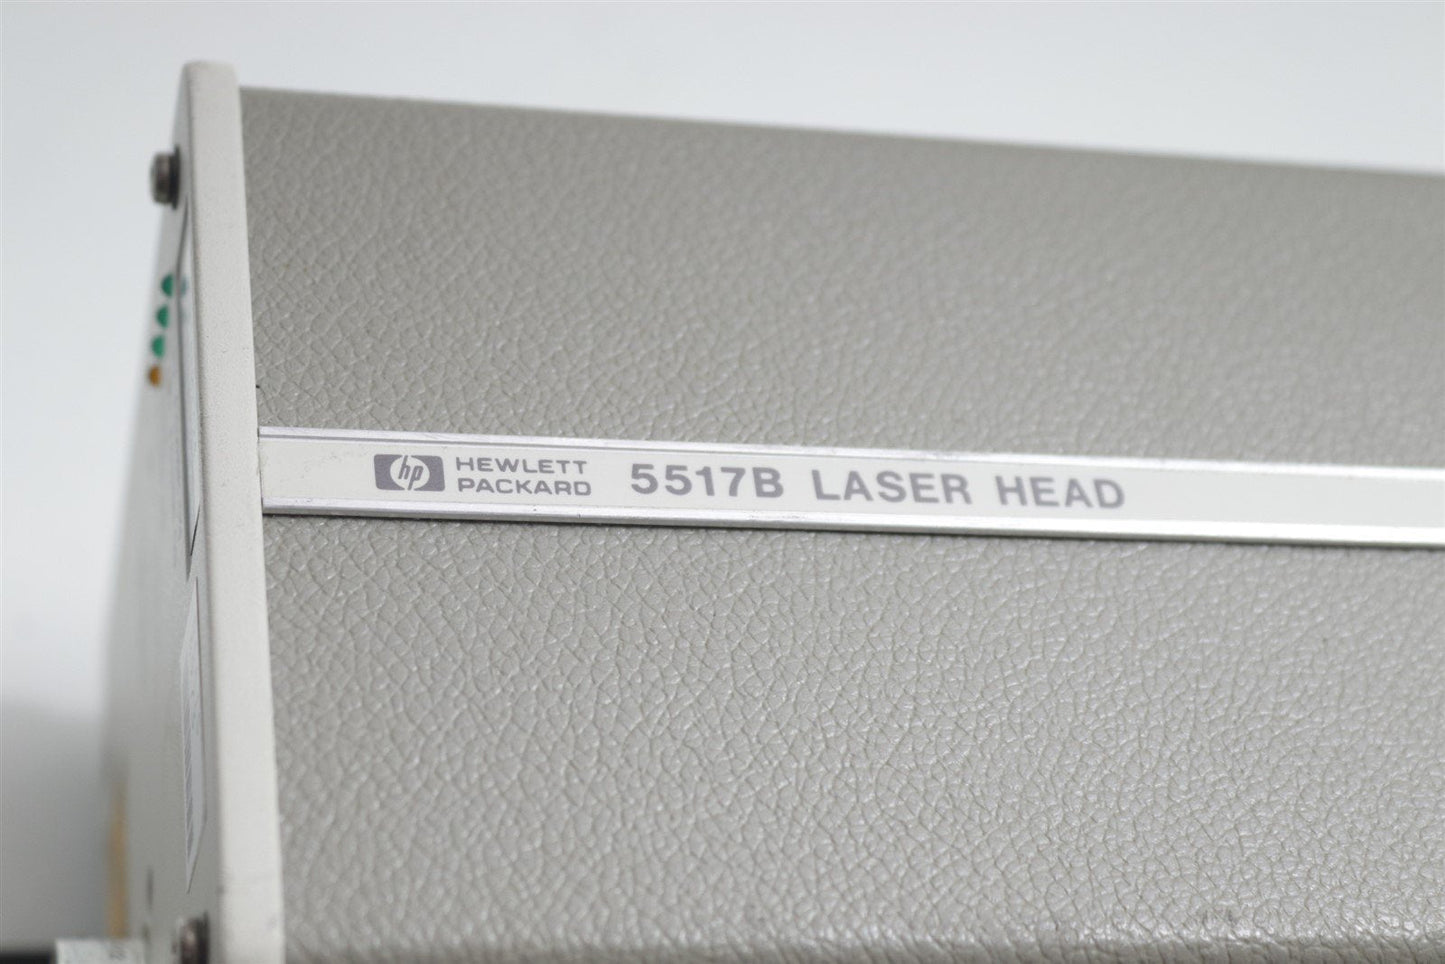 Hewlett Packard 5517B Laser Head